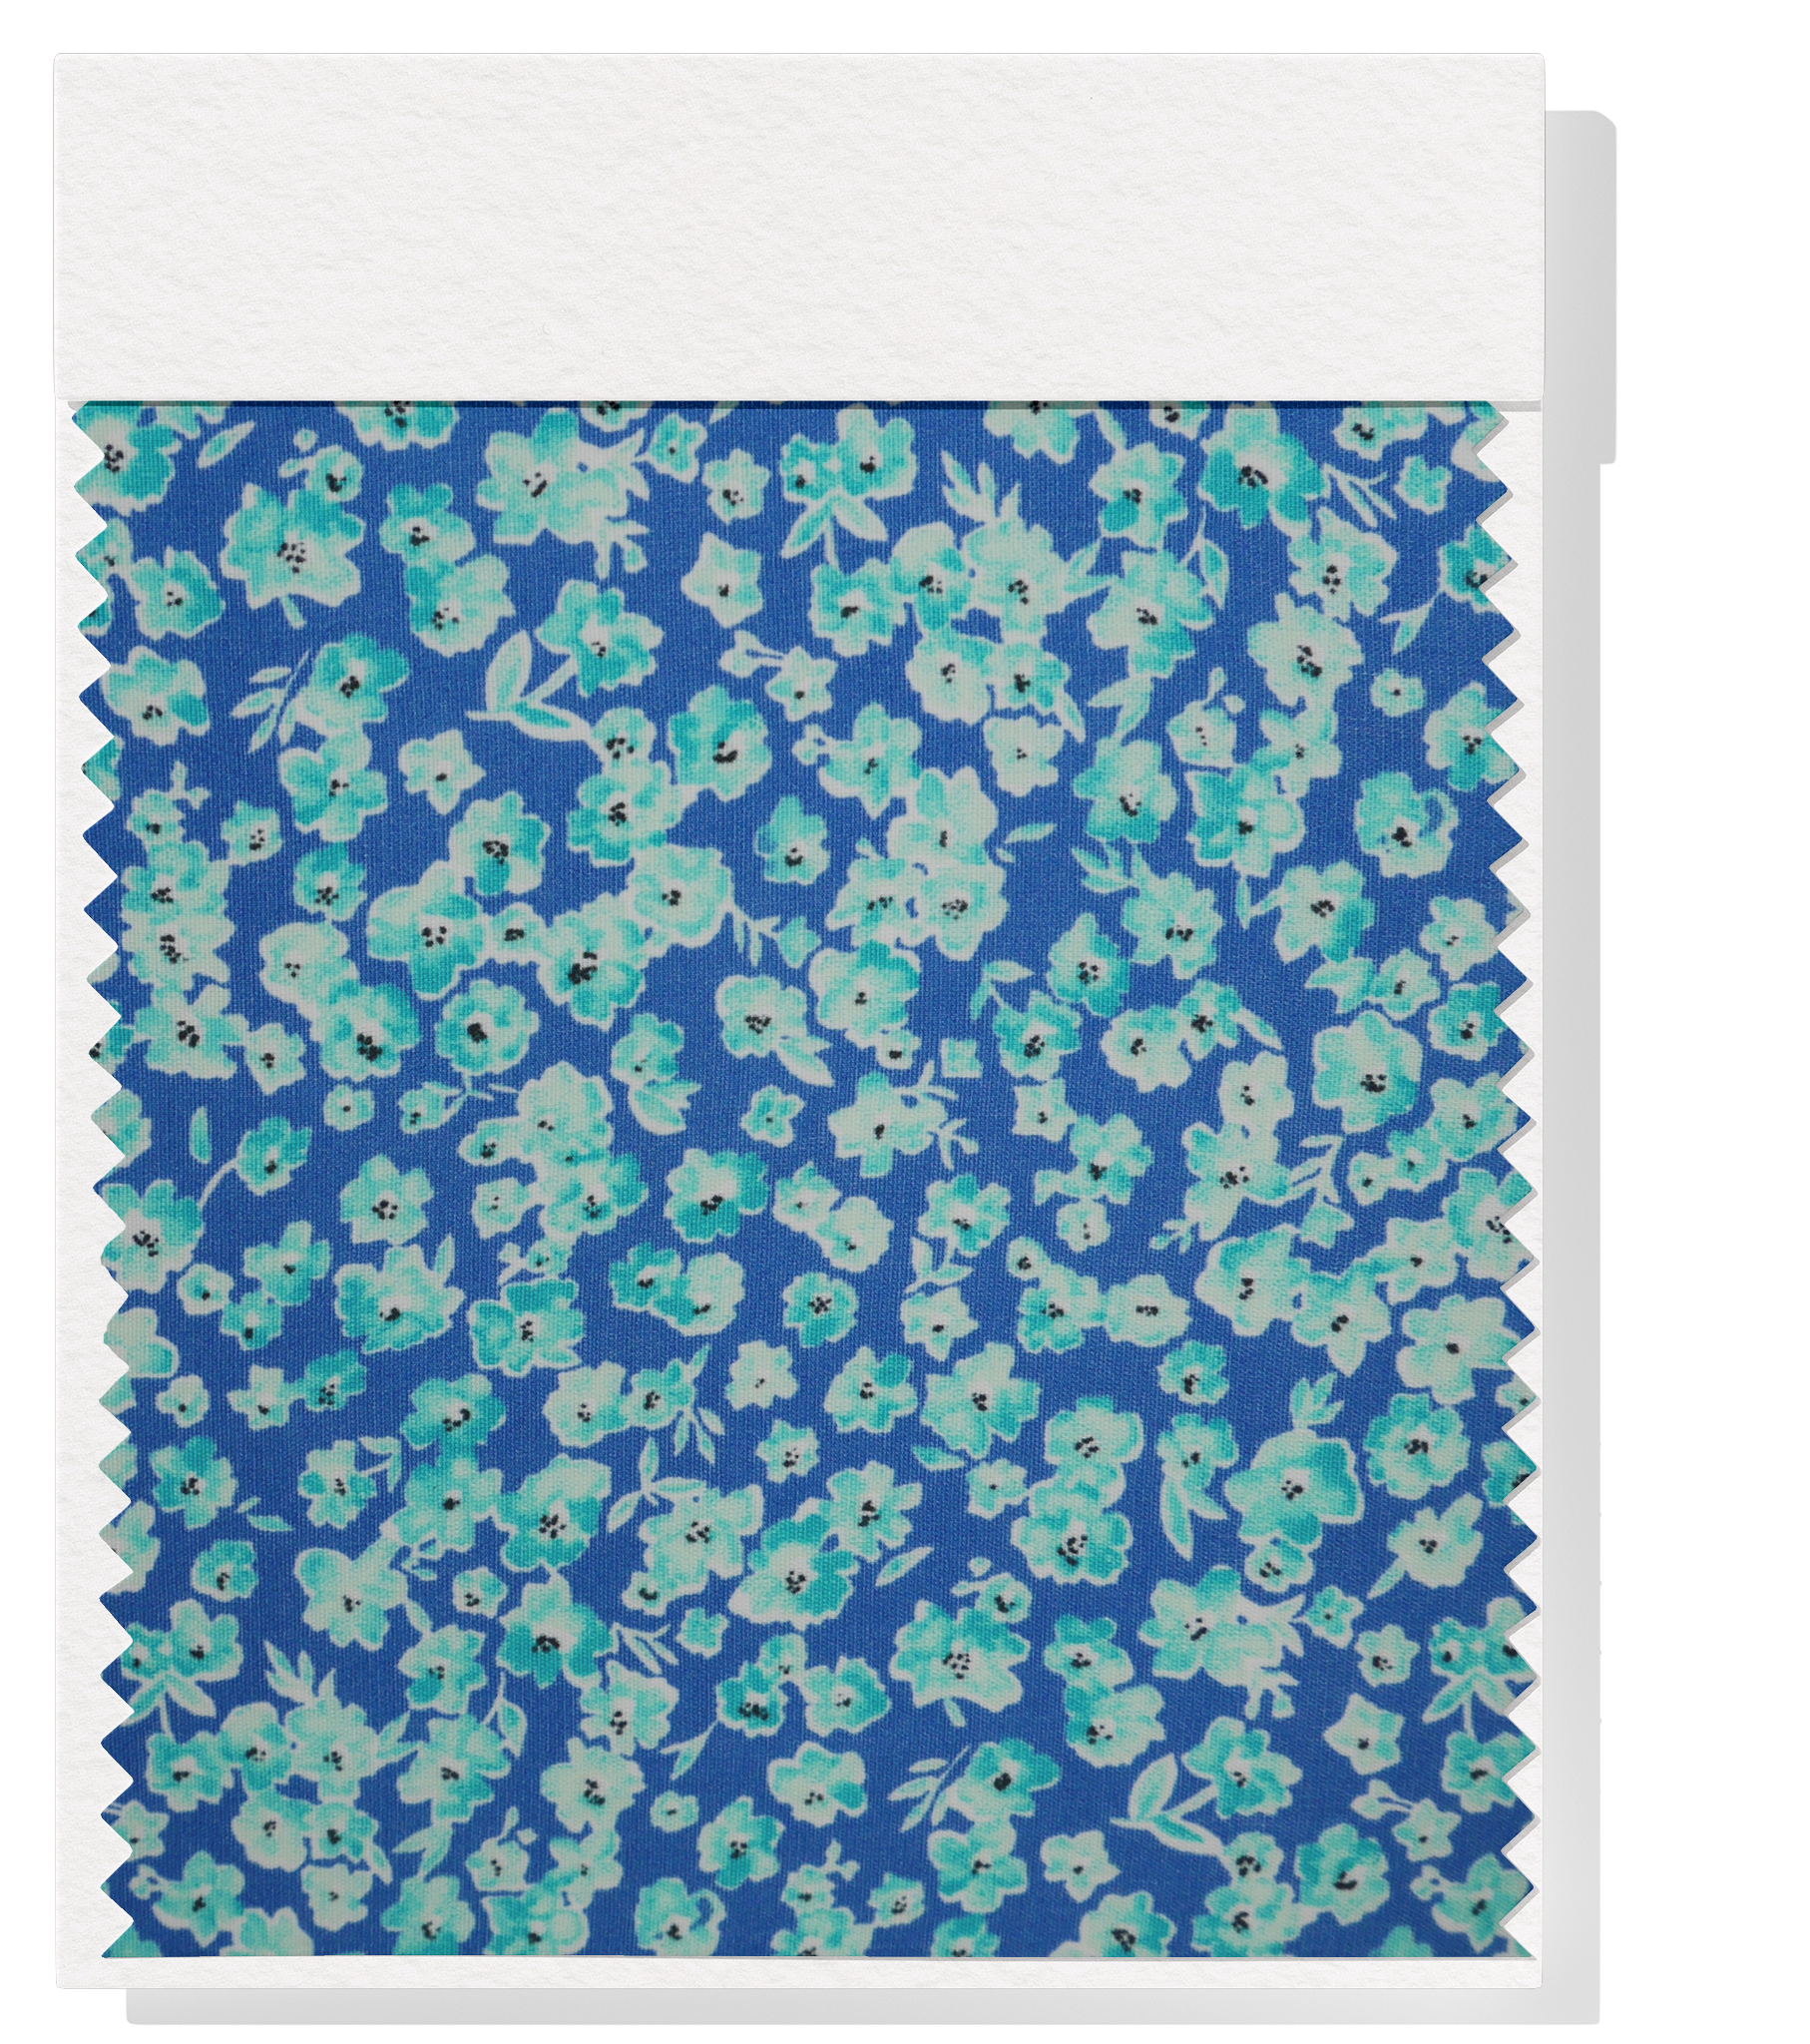 Viscose/ Rayon Crepe Print $22.00p/m - Dainty Blue Floral